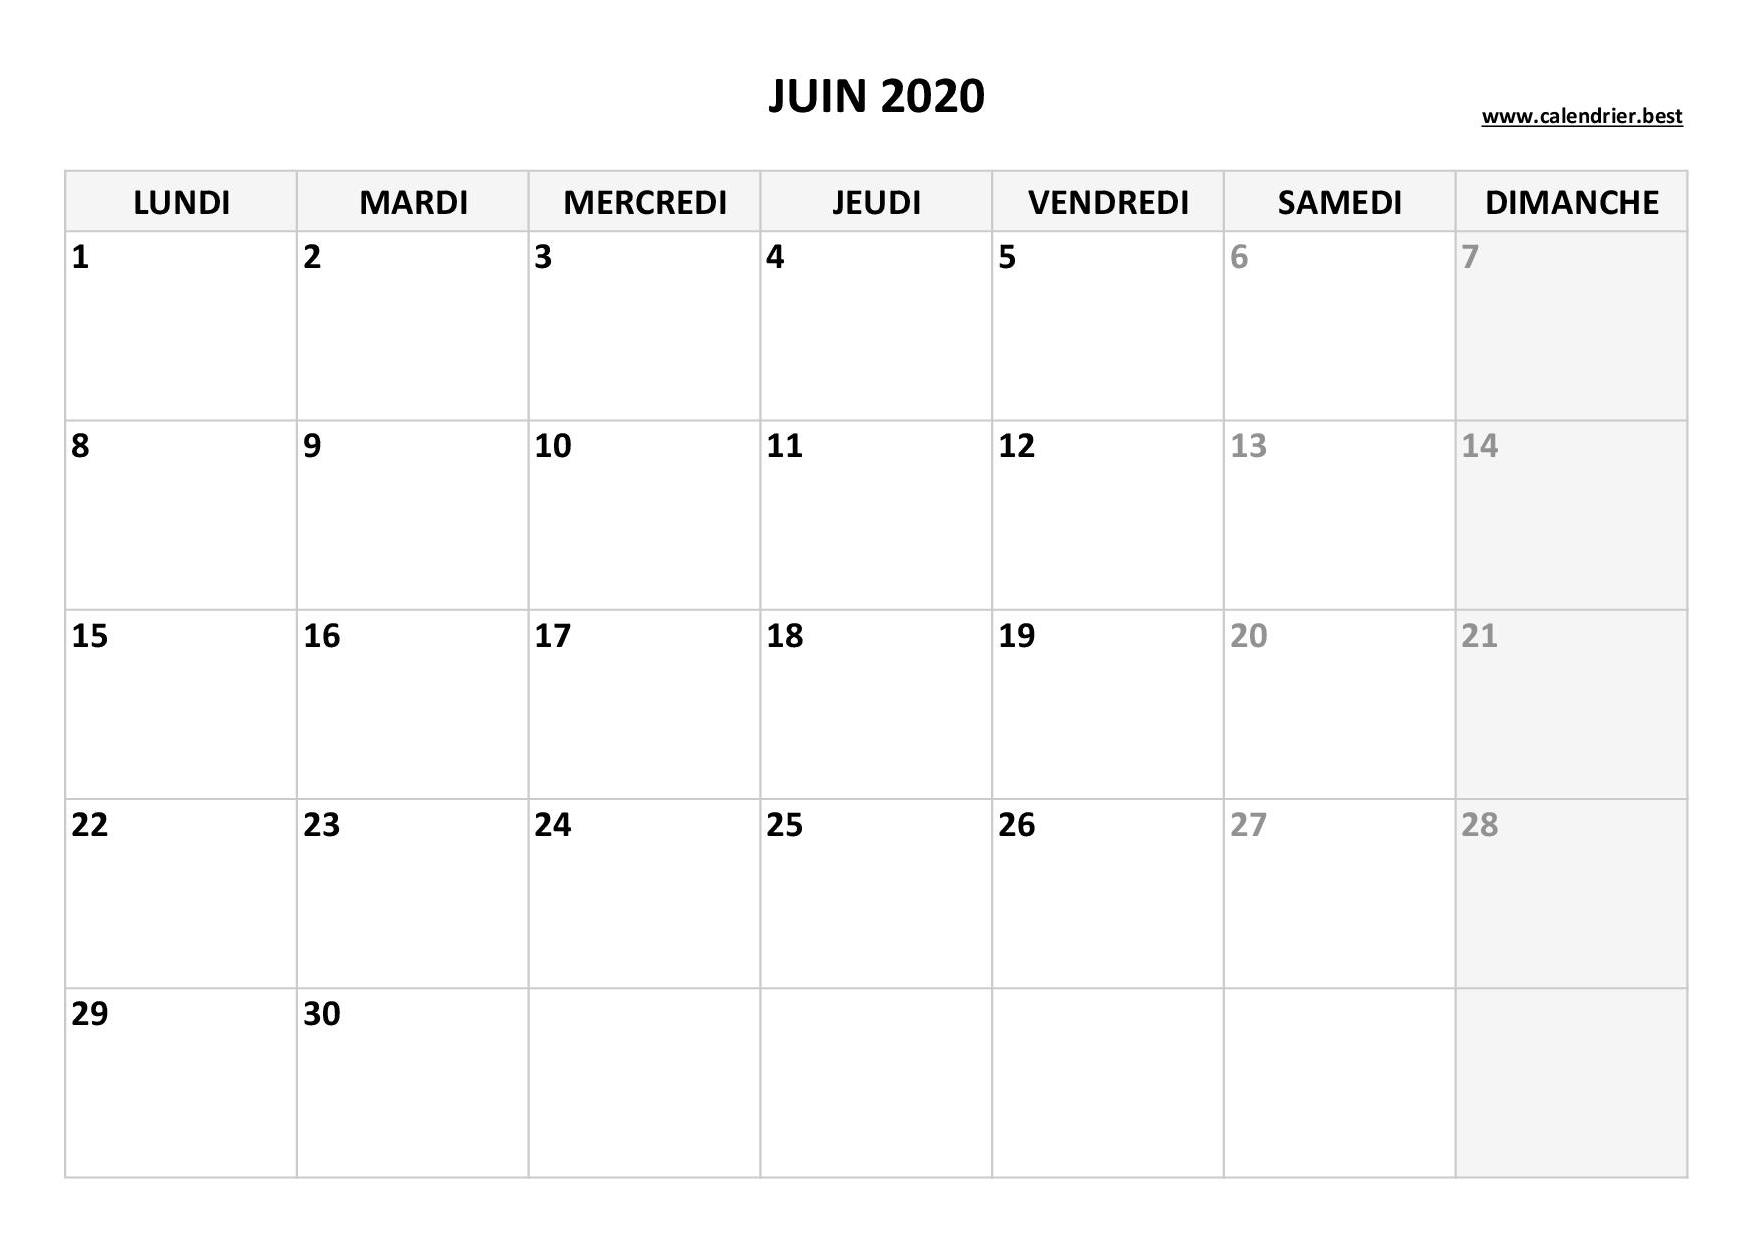 Calendrier Juin 2020 à consulter ou imprimer -Calendrier.best